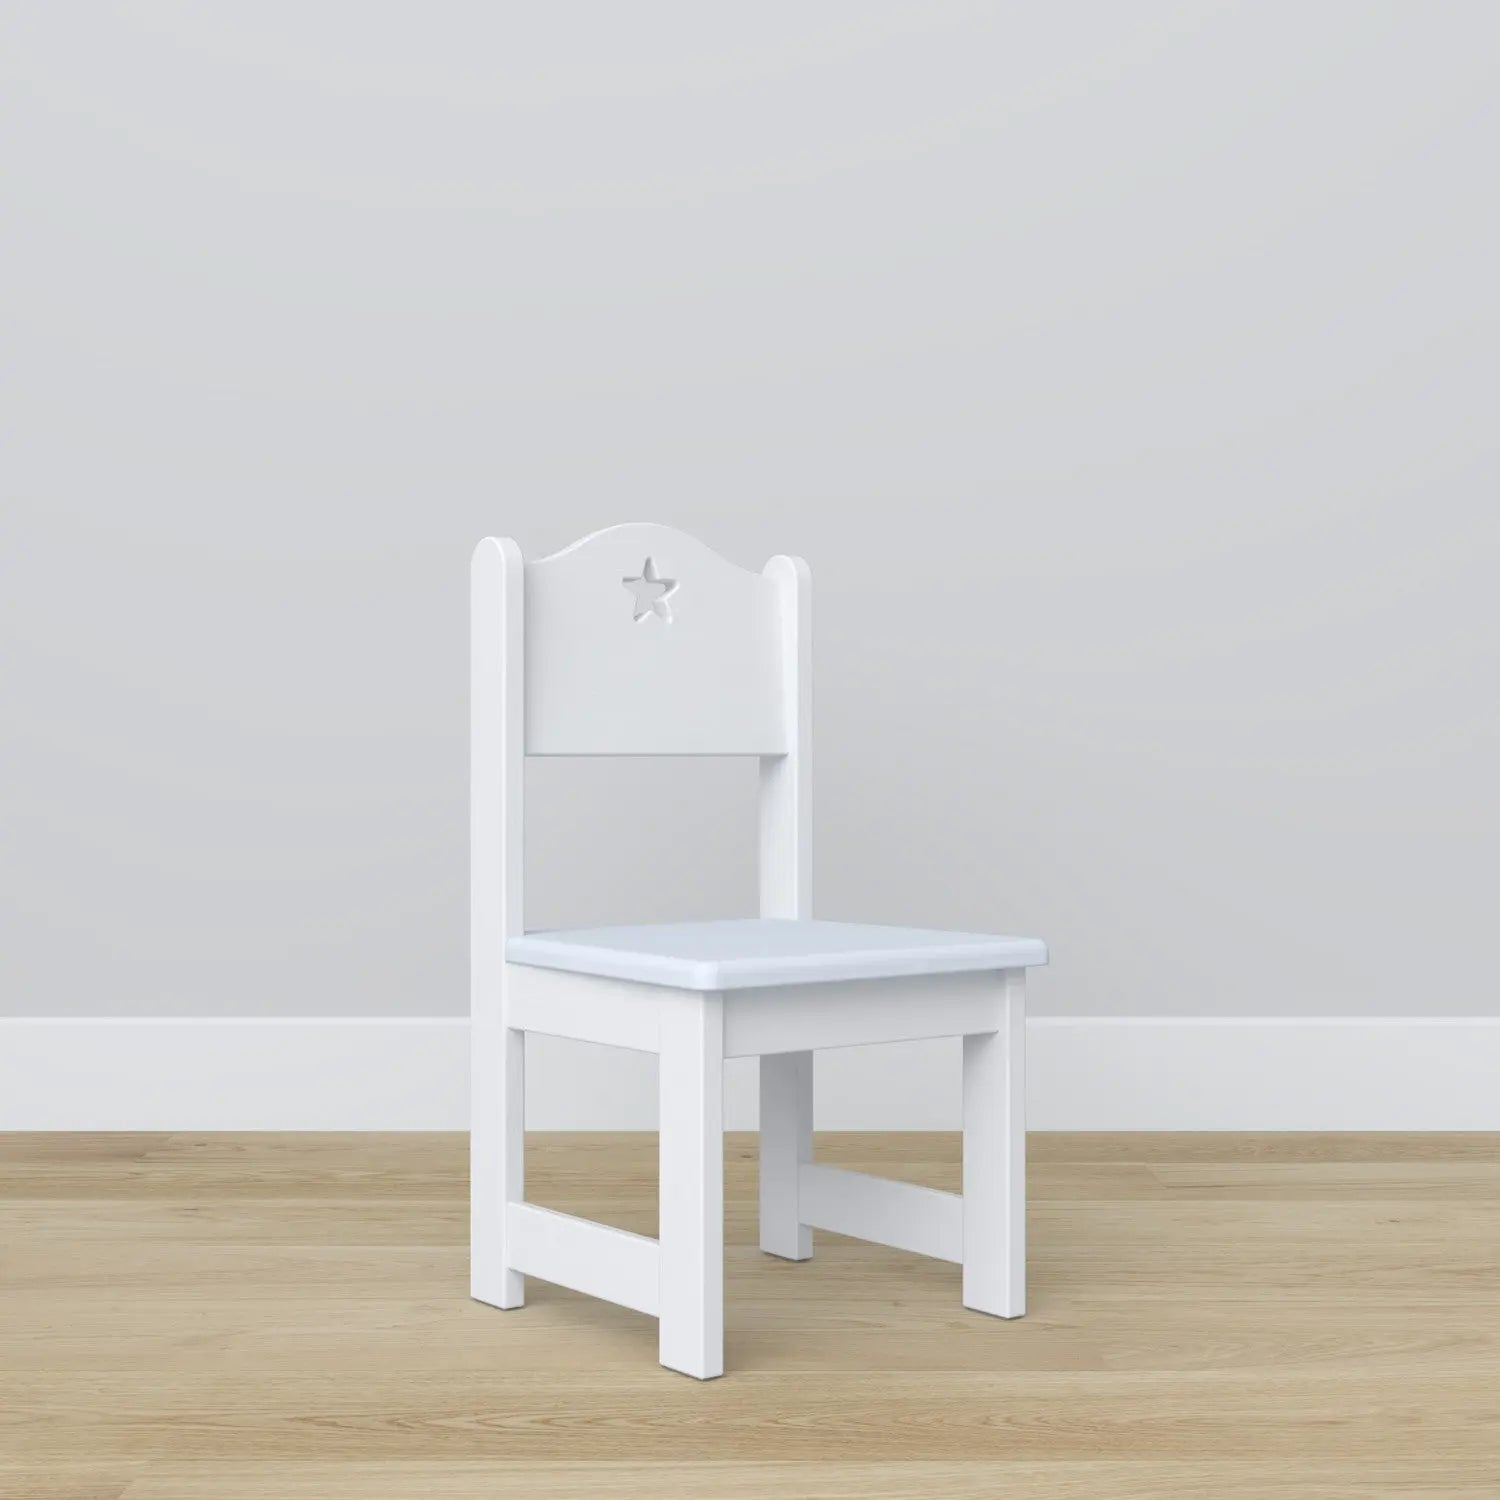 Back-panelled Small Chair - Blue-Nursery & Beyond-Blue Almonds-Blue Almonds-London-South Kensington